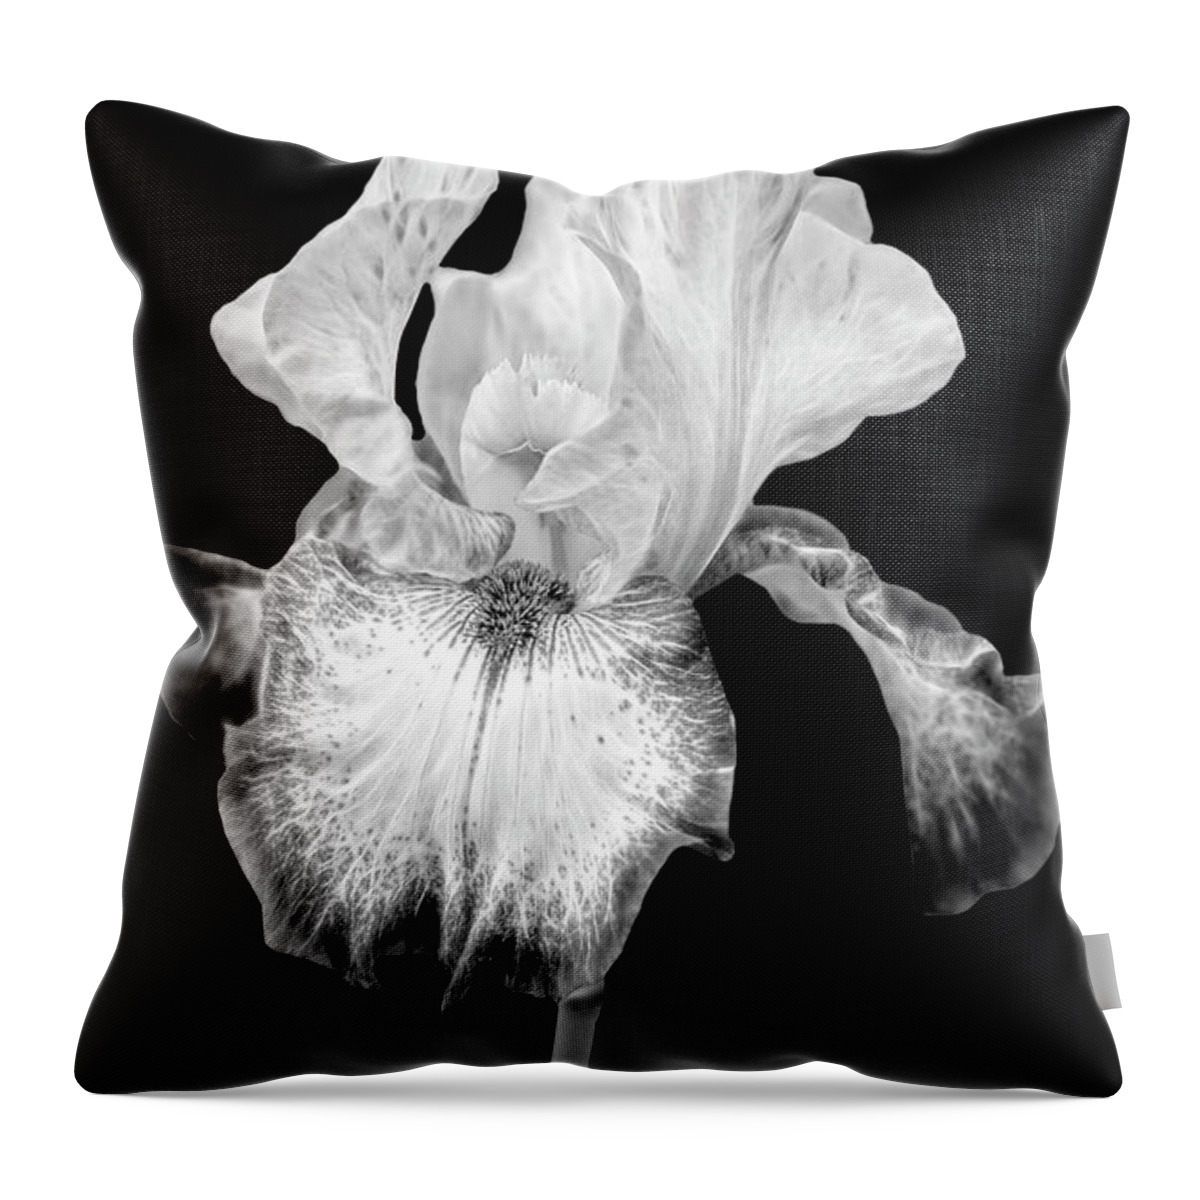 Iris Throw Pillow featuring the photograph Electric Iris FlowerBW by Susan Candelario